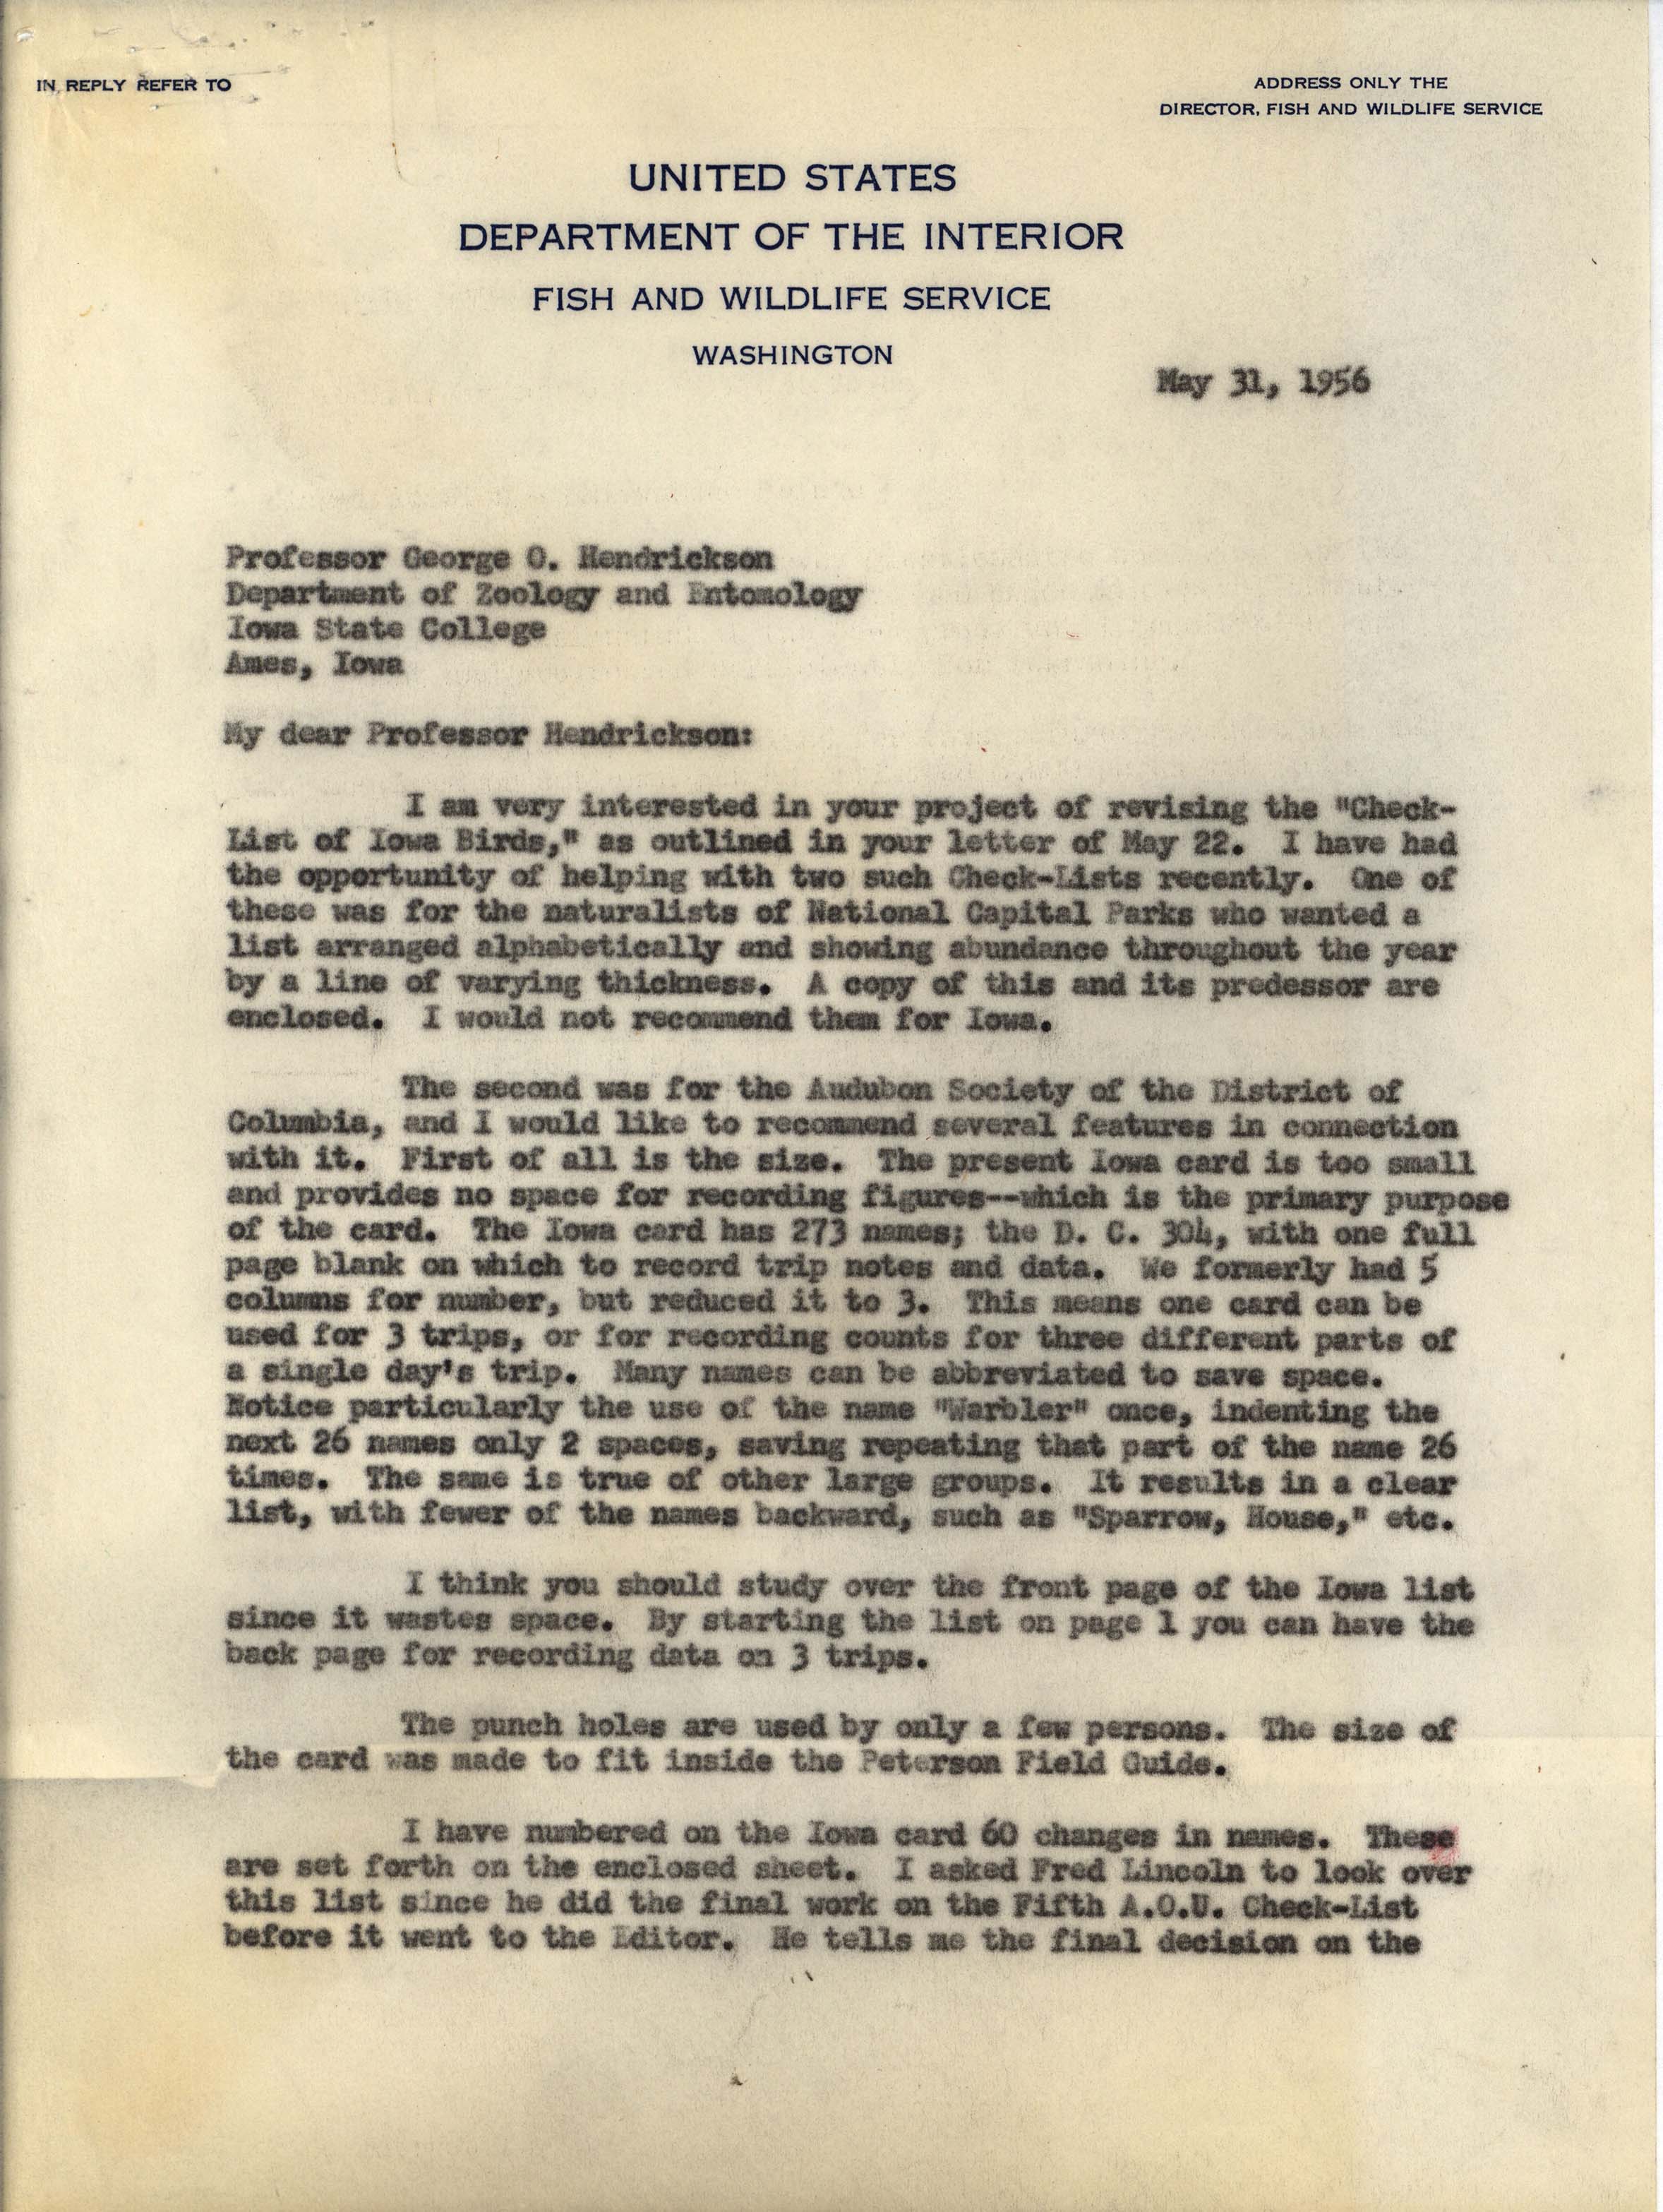 Philip DuMont letter to George Hendrickson regarding revising the Check-List of Iowa Birds, May 31, 1956